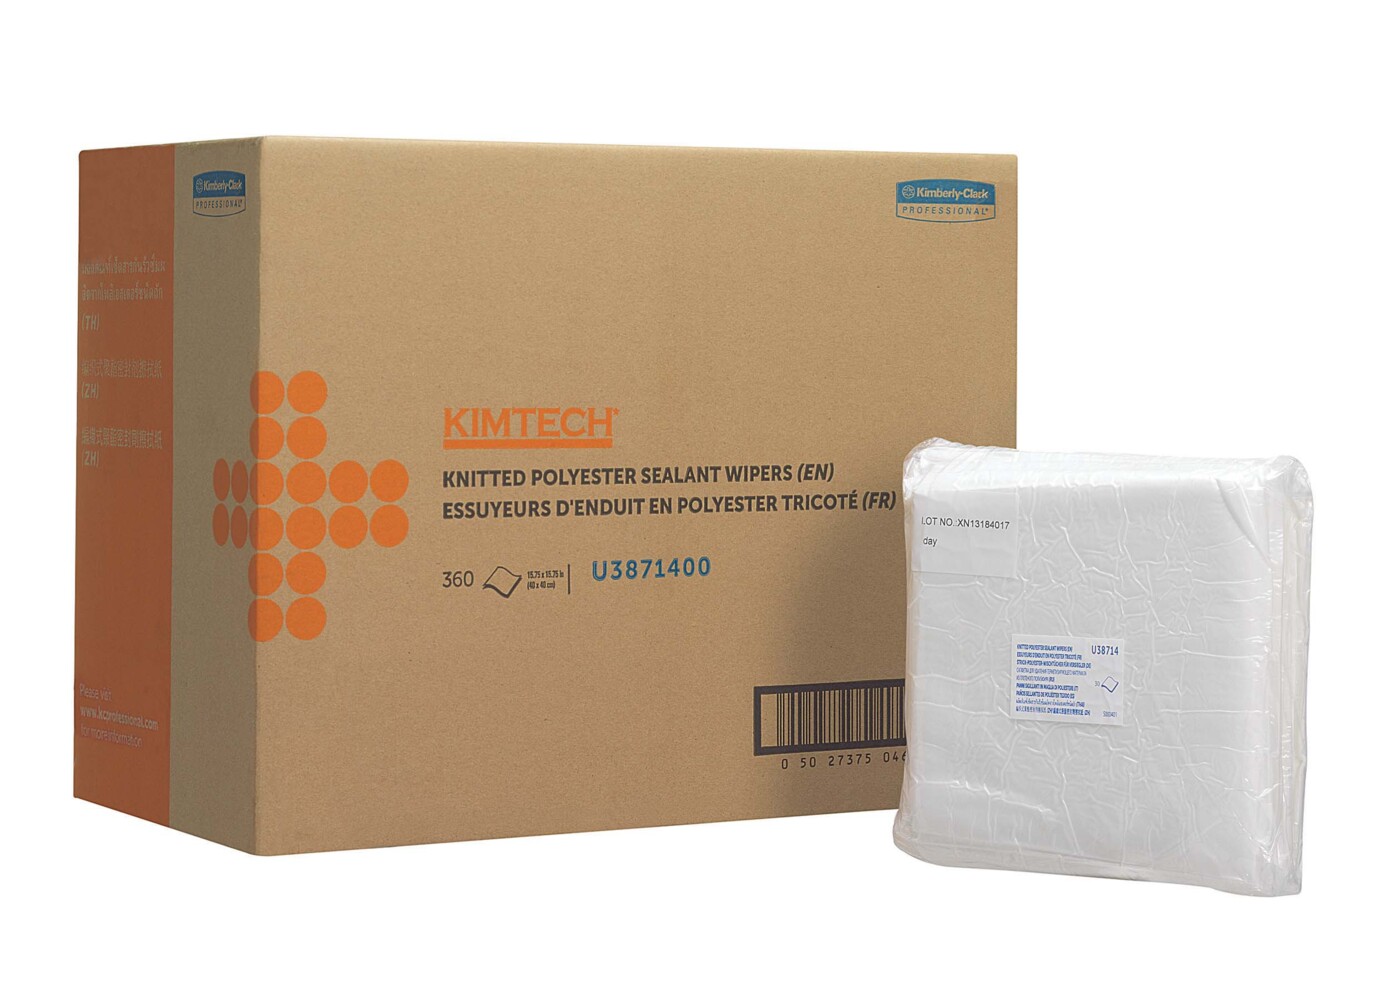 Gedeeltelijk Afhaalmaaltijd Kerel Kimtech® Auto Polyester Sealant Wipers 38714 - 30 unfolded, white sheets  per pack (box contains 12 packs)